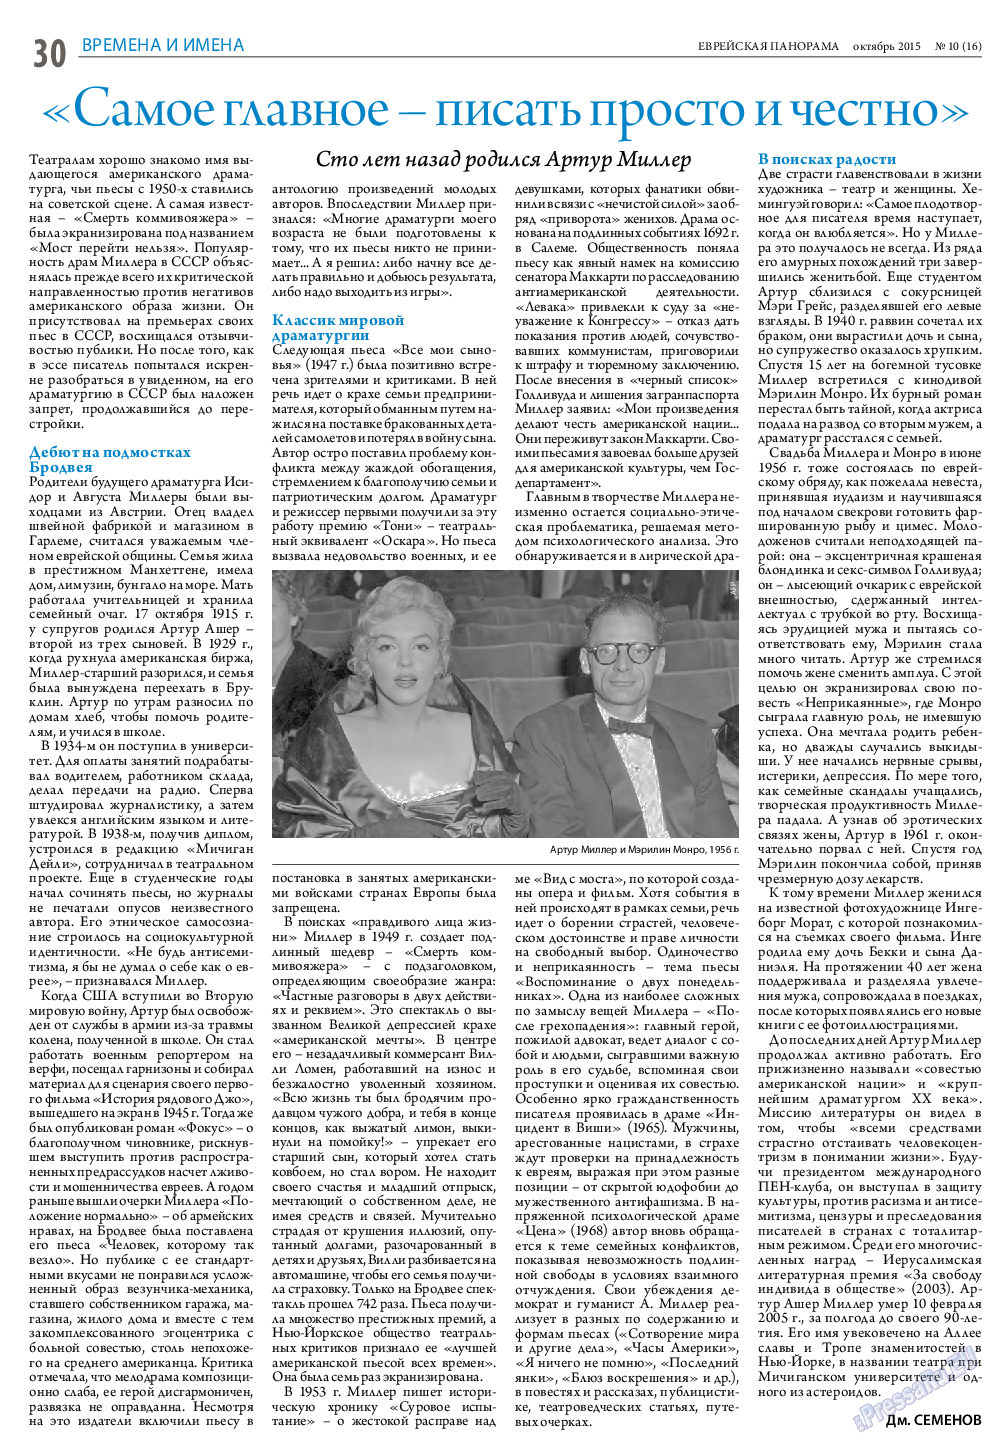 Еврейская панорама, газета. 2015 №10 стр.30